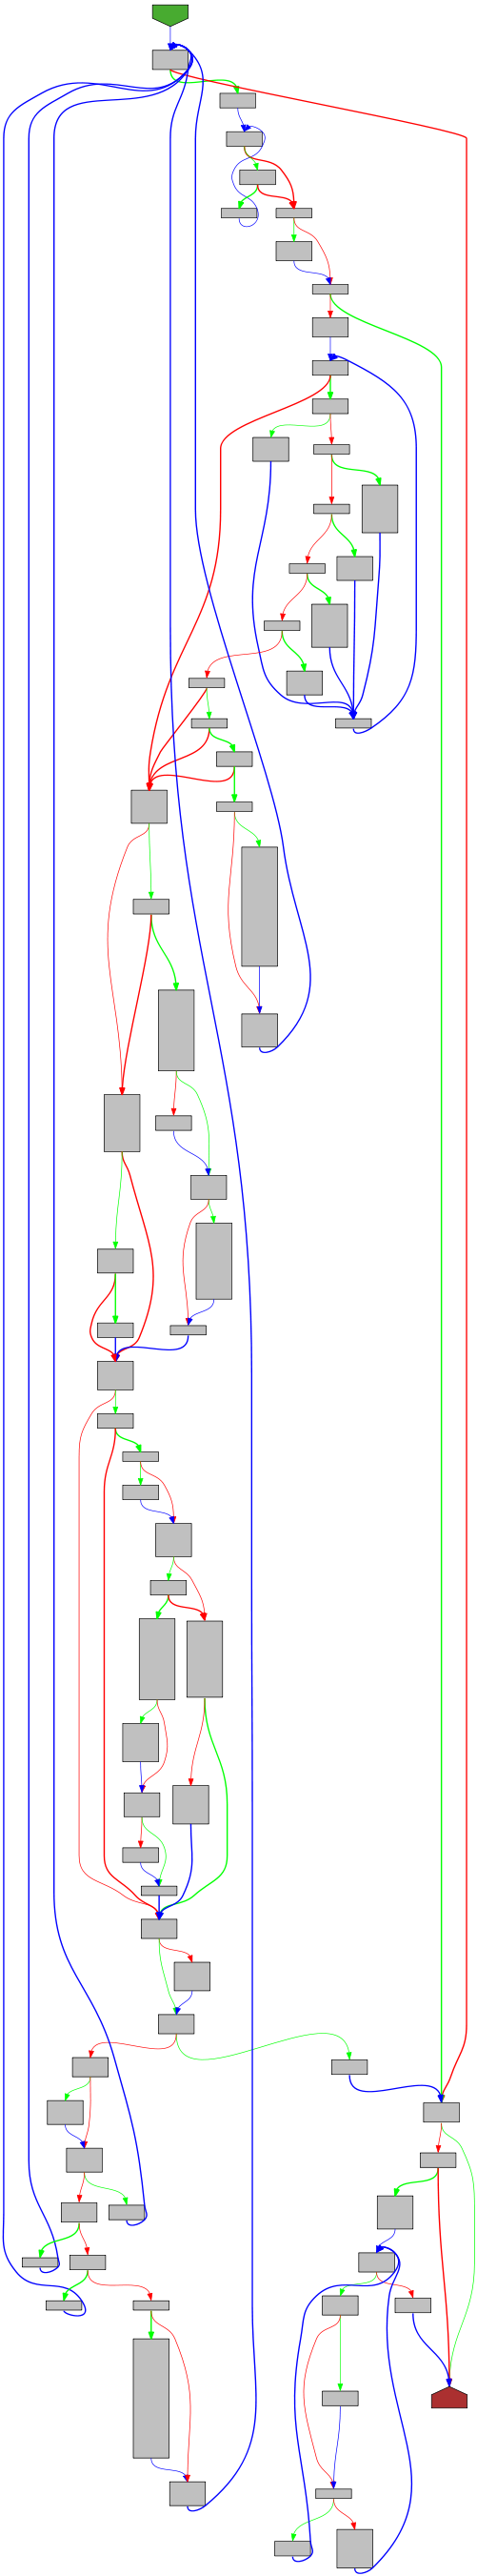 Control flow graph of doPrintf